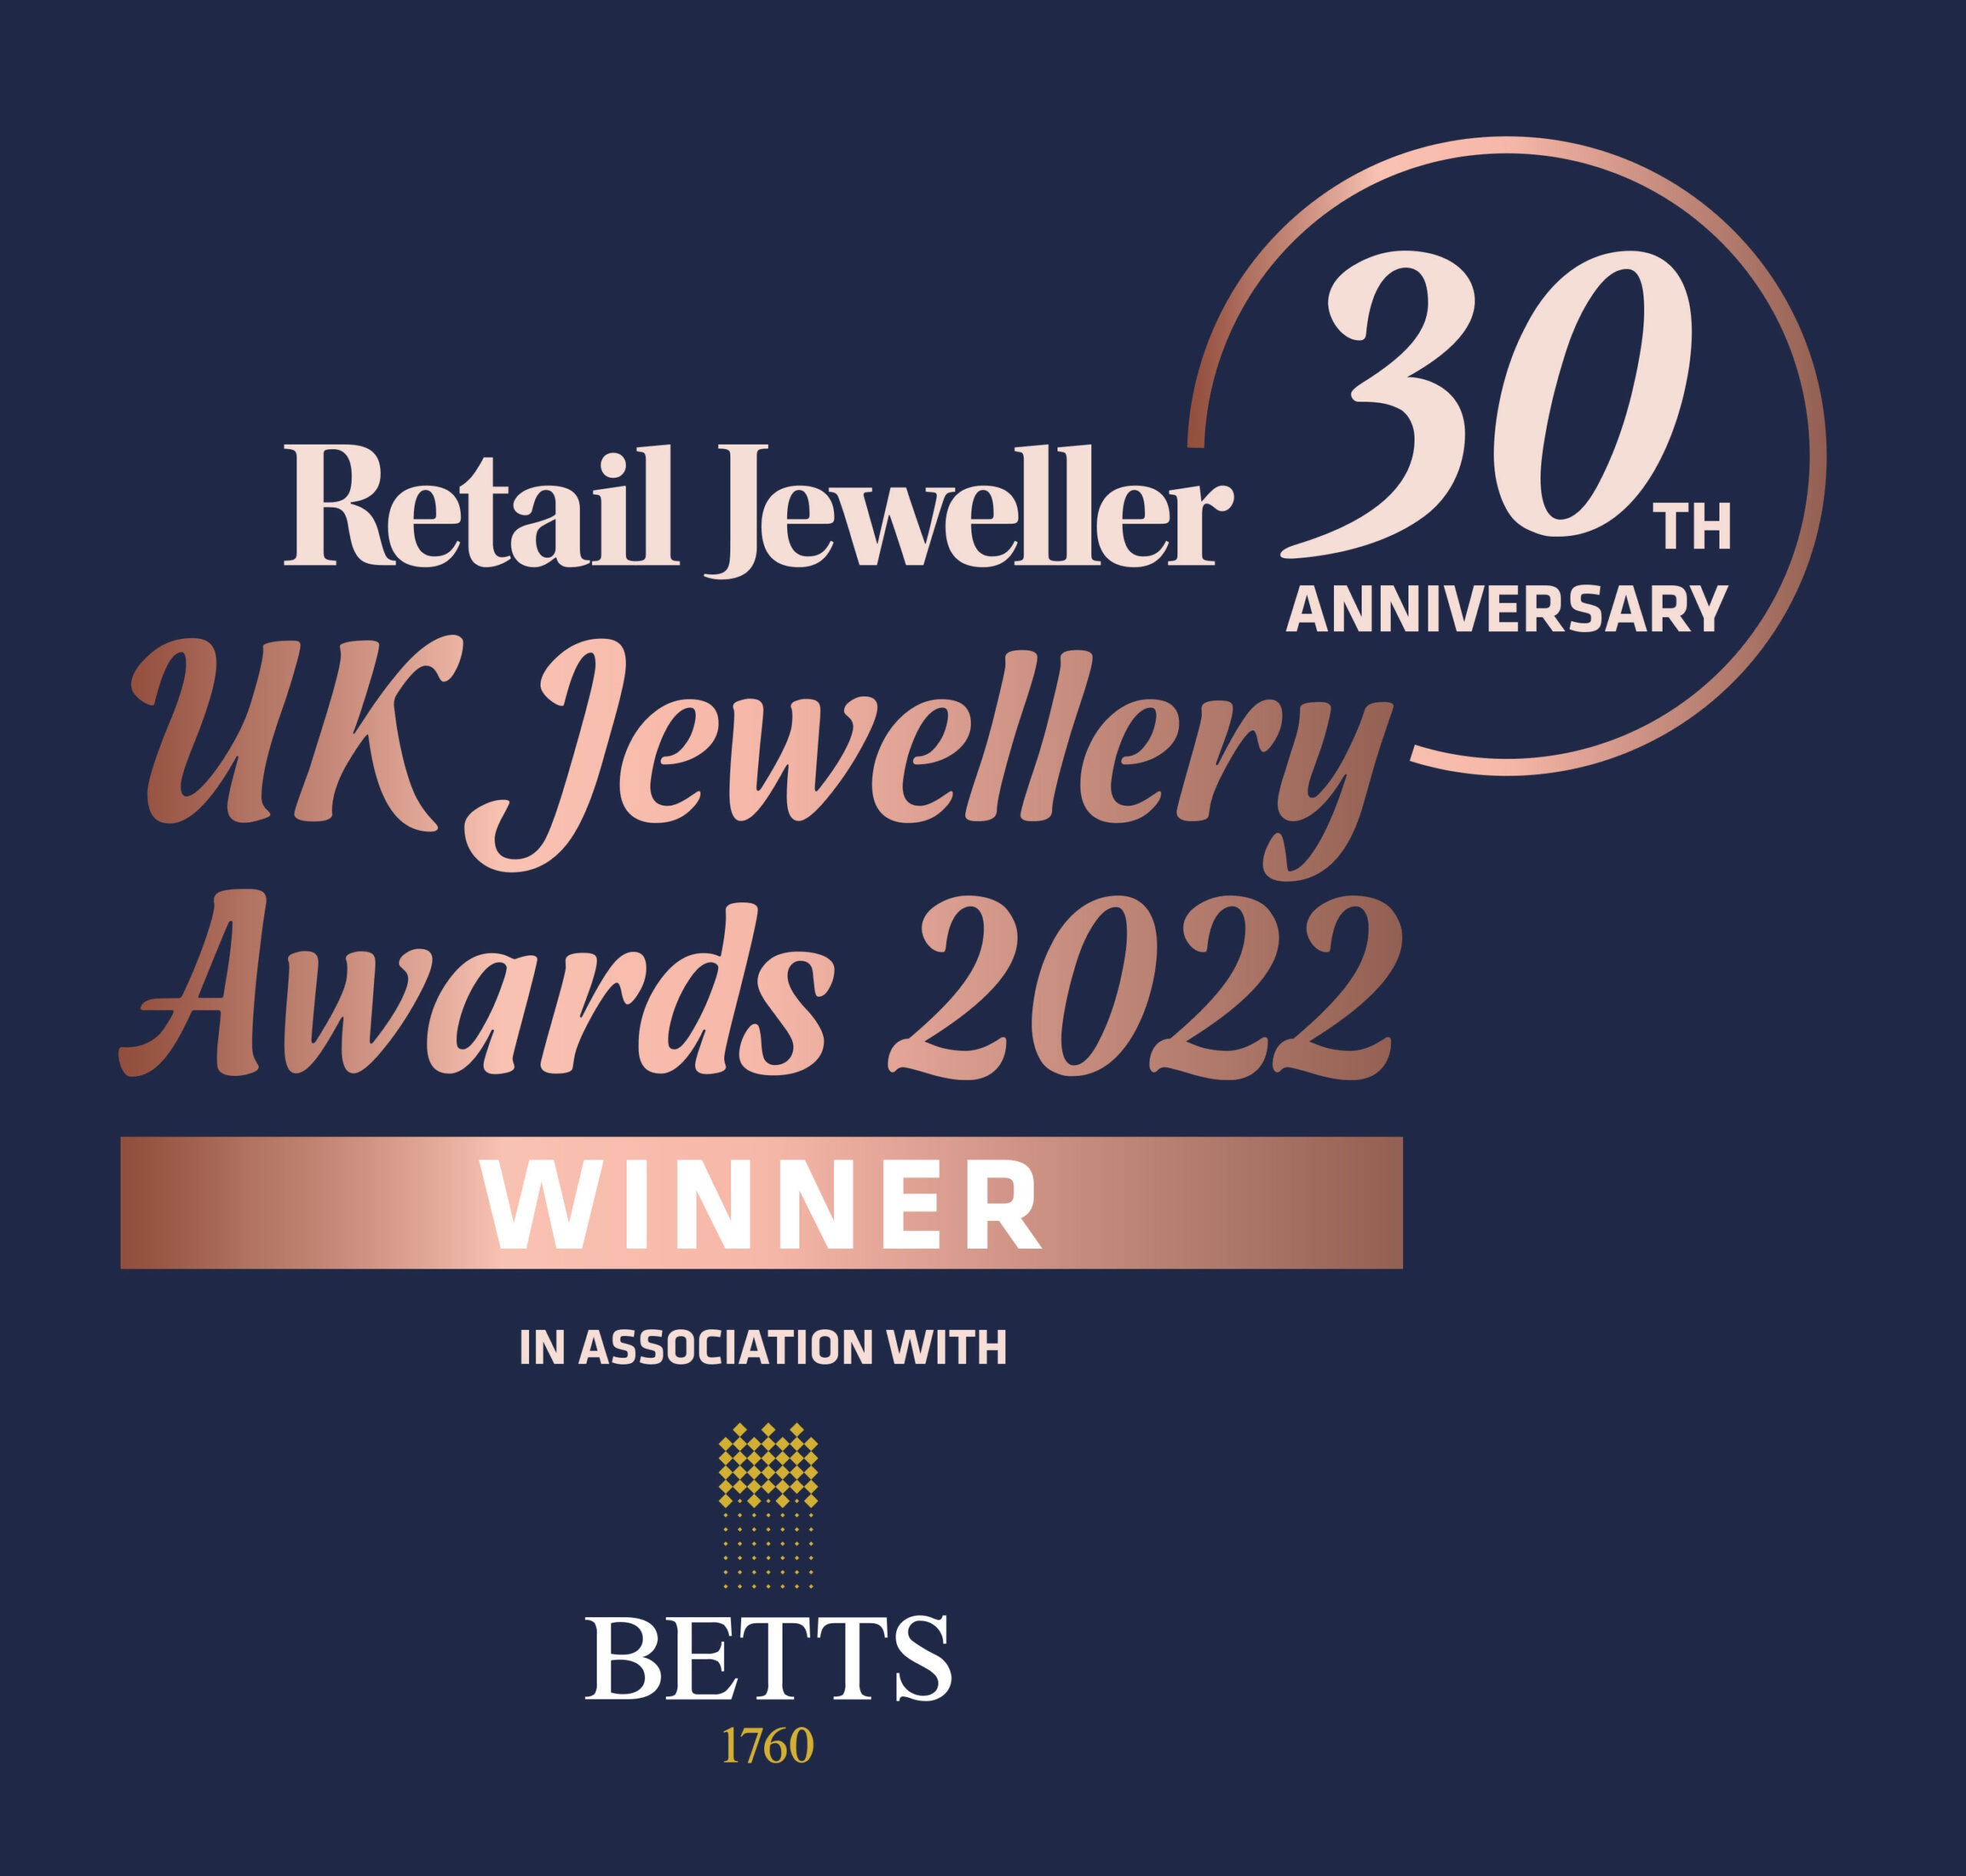 Bradleys Jewellers Winner of UK Jewellery Awards 2022